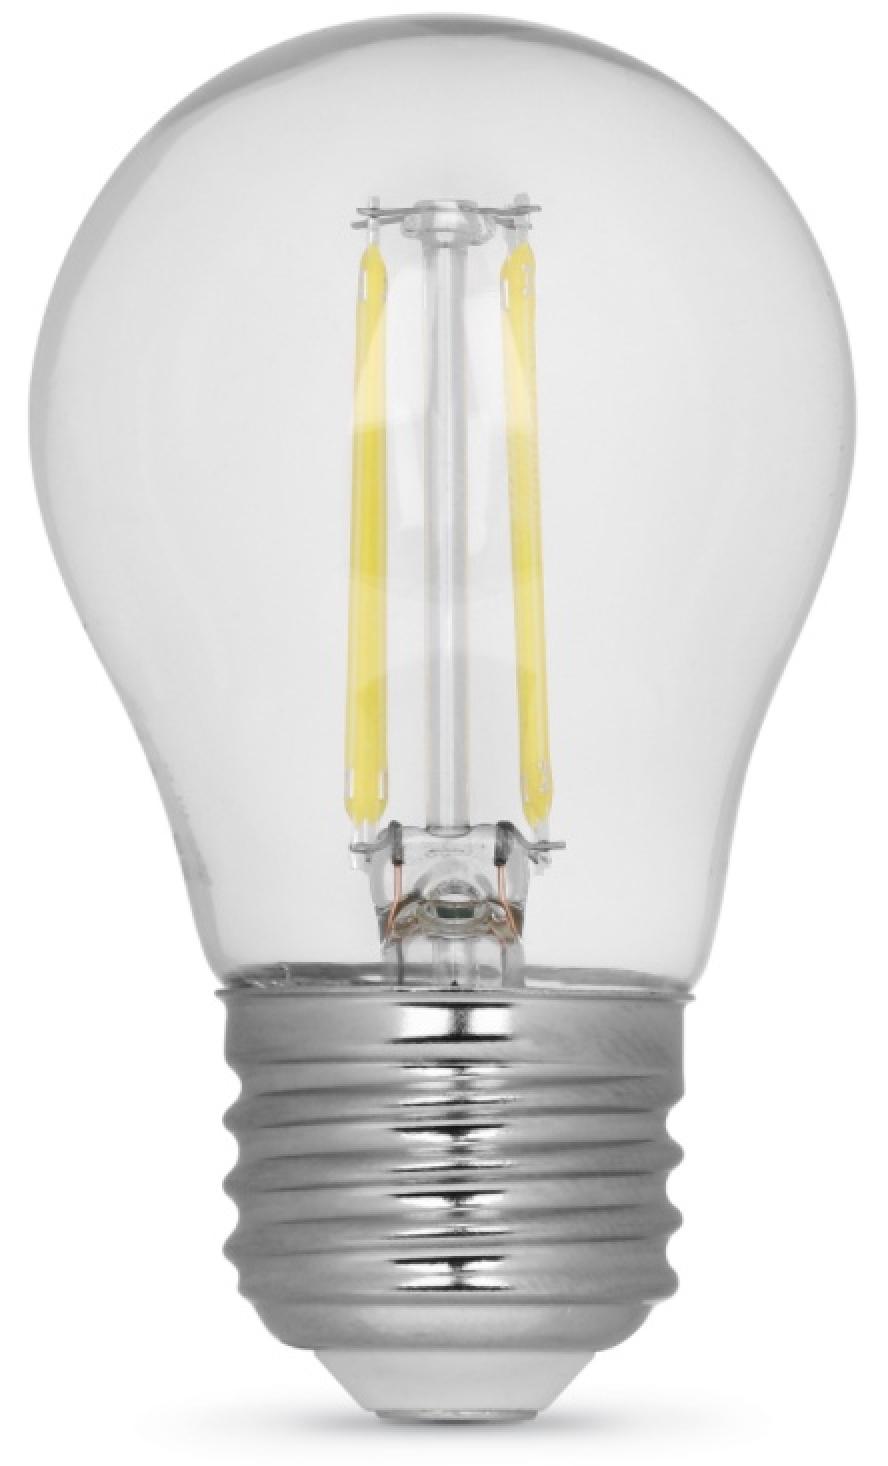 Feit Electric LED 60-Watt Equivalent 500 Lumen A15 Daylight Dimmable Light Bulb (2-Pack)